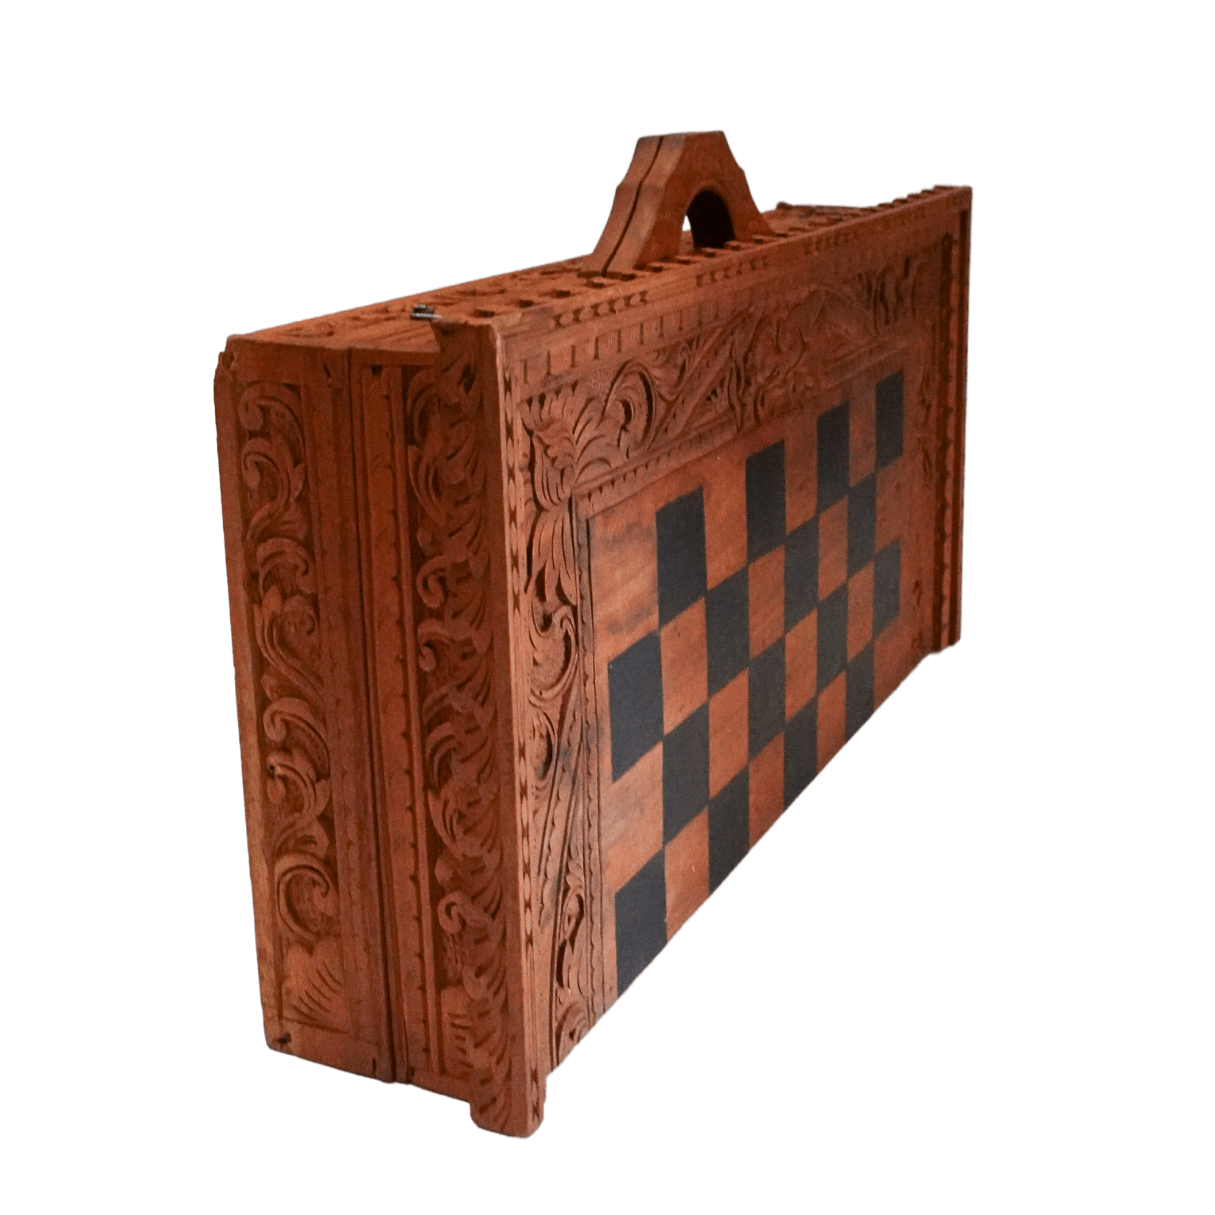 Tabuleiro de Xadrez artesanal de Madeira feito em Marchetaria